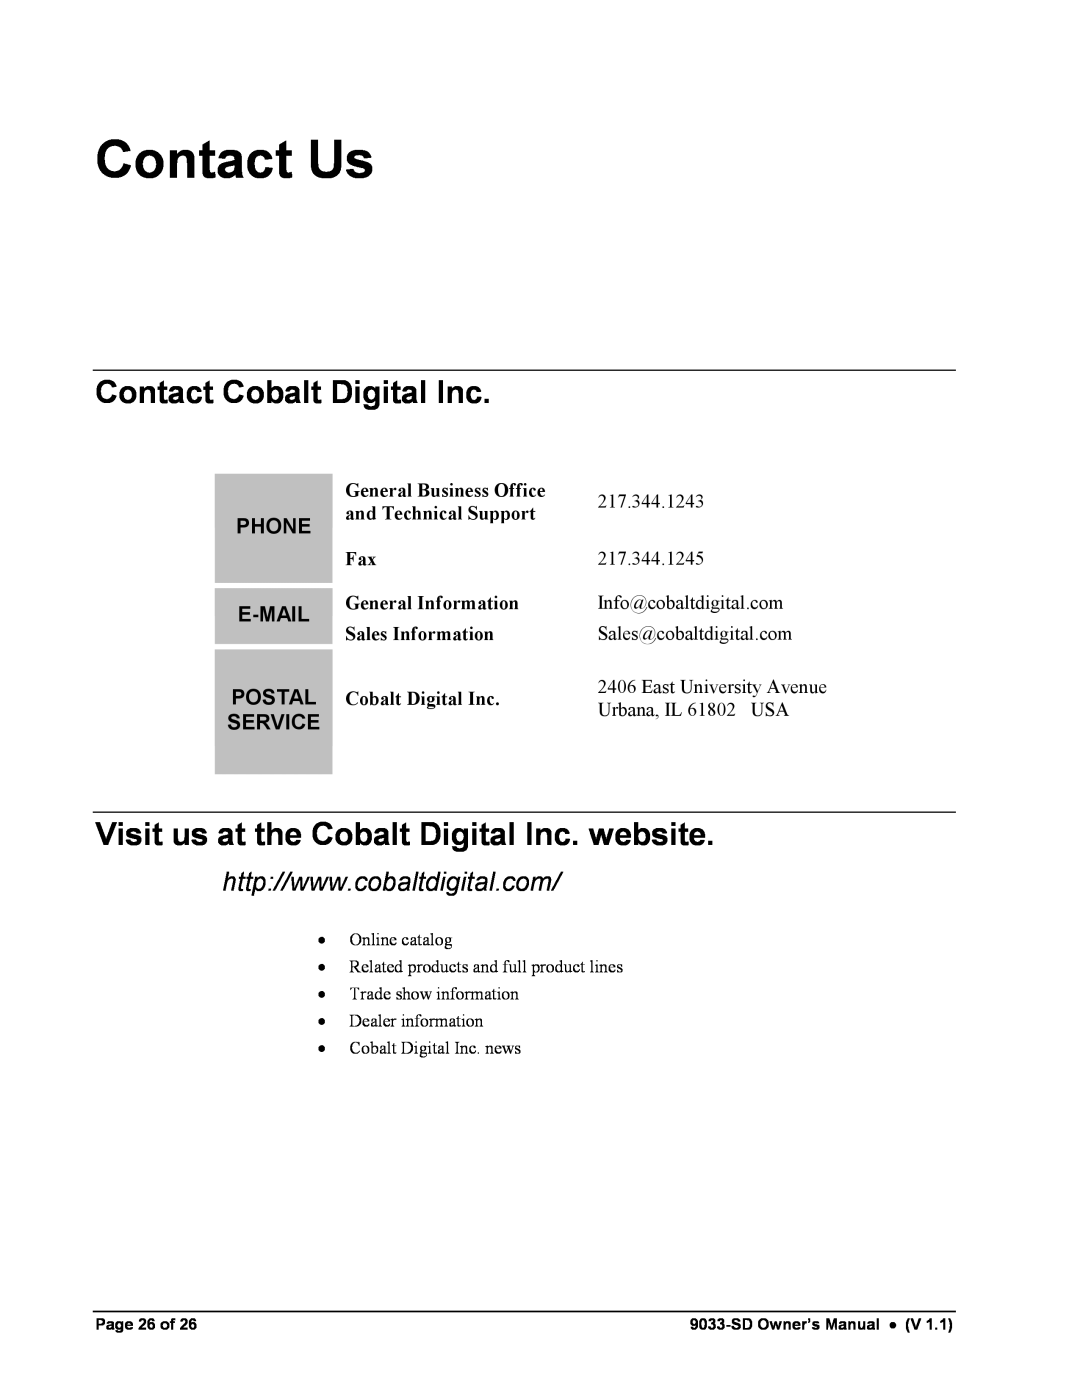 Cobalt Networks 9033-SD Contact Us, Contact Cobalt Digital Inc, Visit us at the Cobalt Digital Inc. website, Phone, E-Mail 